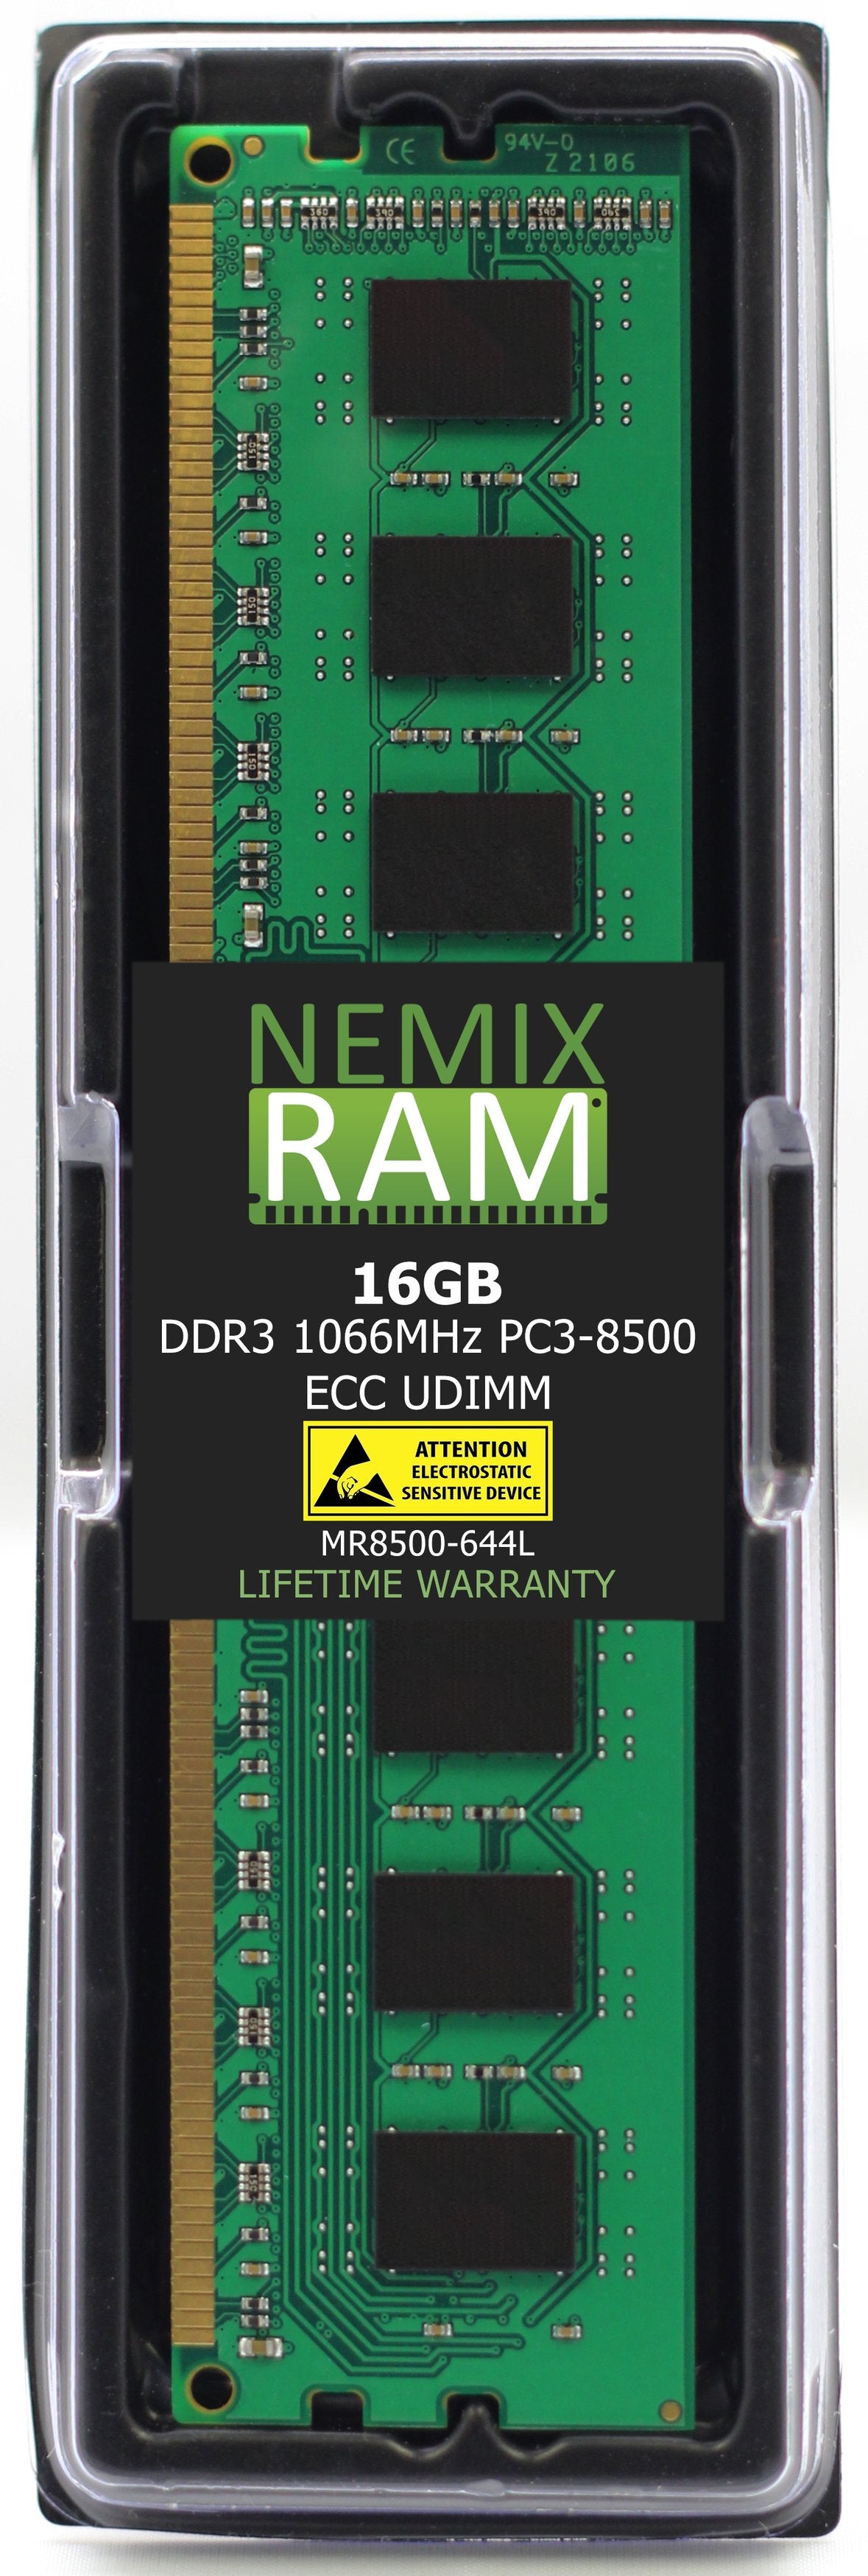 NEC Express5800 T120b-E Memory Module N8102-383 16GB DDR3 1066MHZ PC3-8500 RDIMM